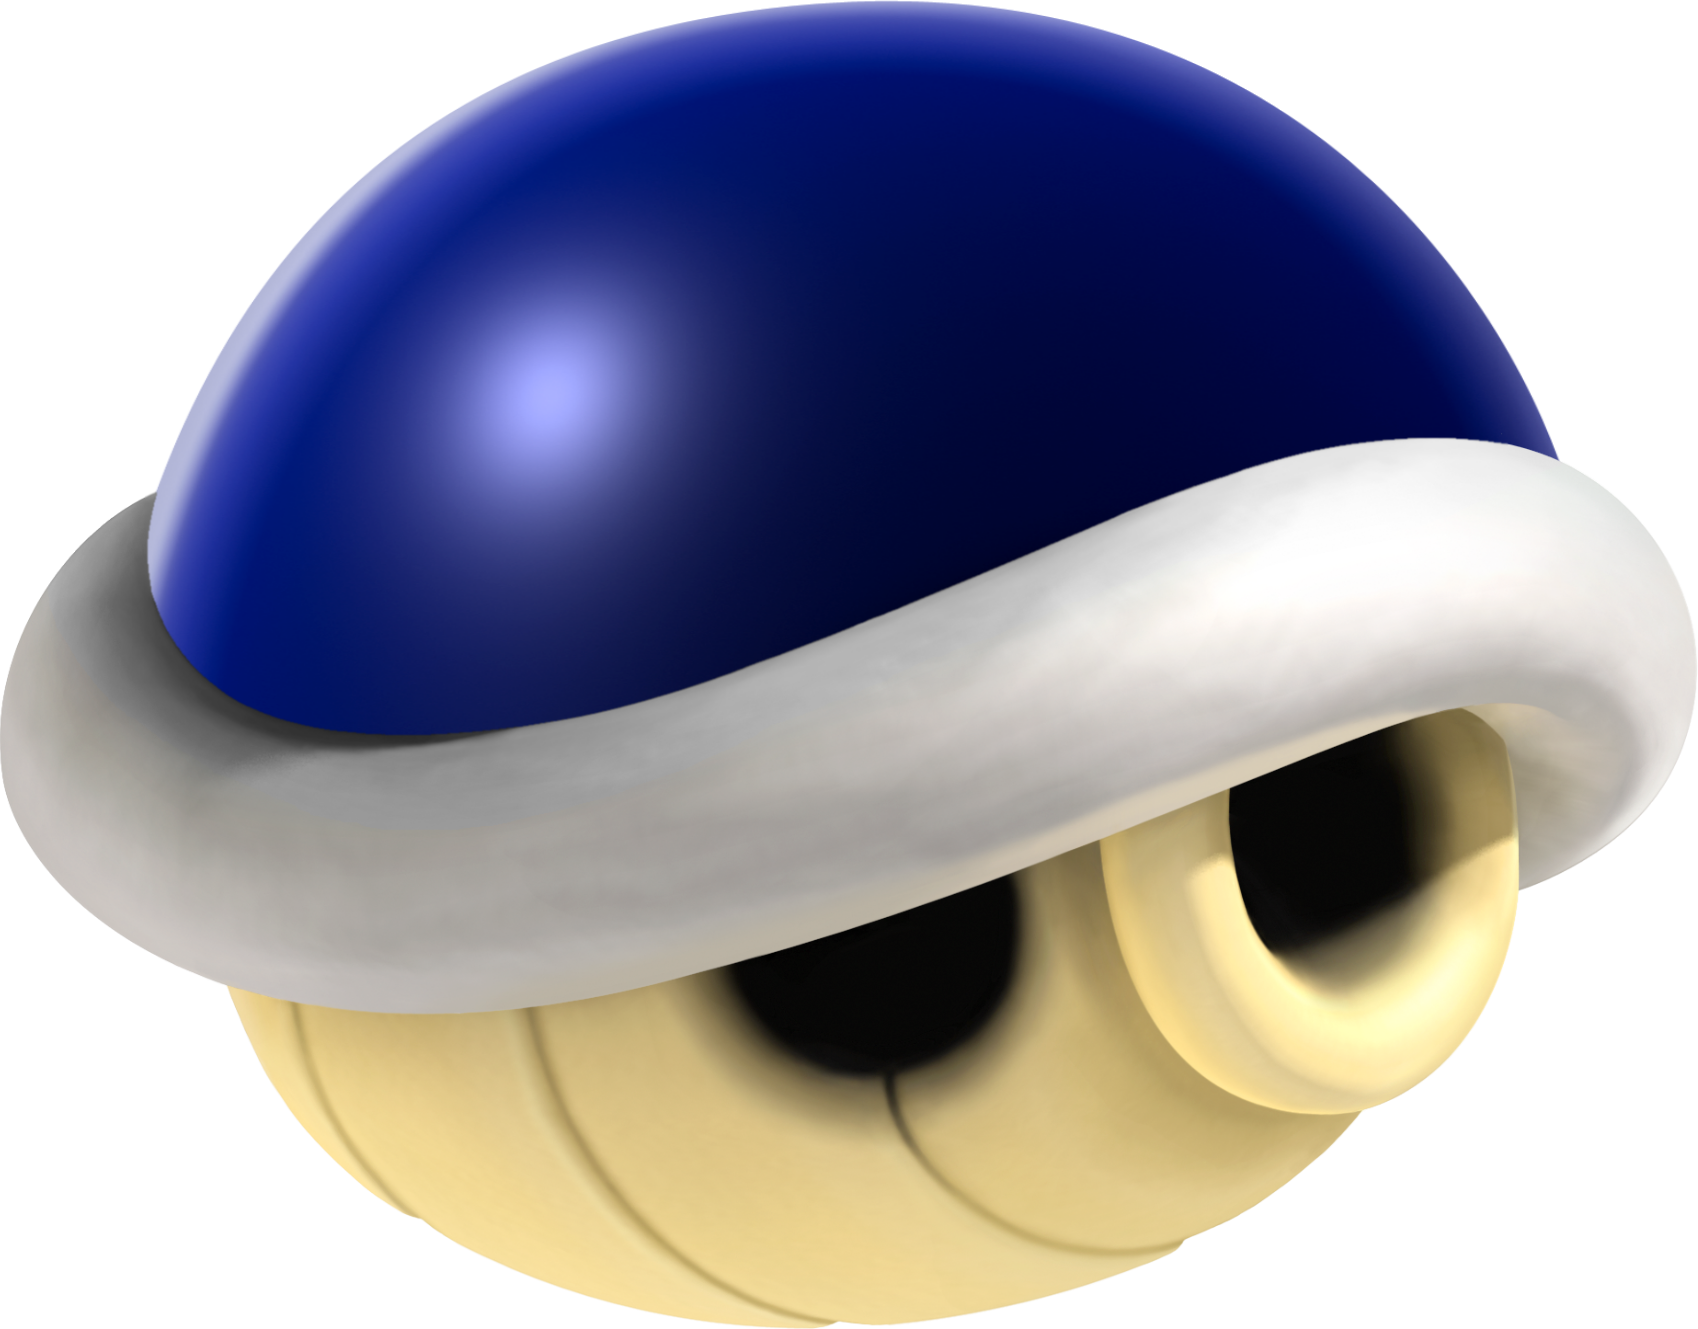 Image Buzzy Beetle Shell Smwupng Fantendo Nintendo Fanon Wiki 3811